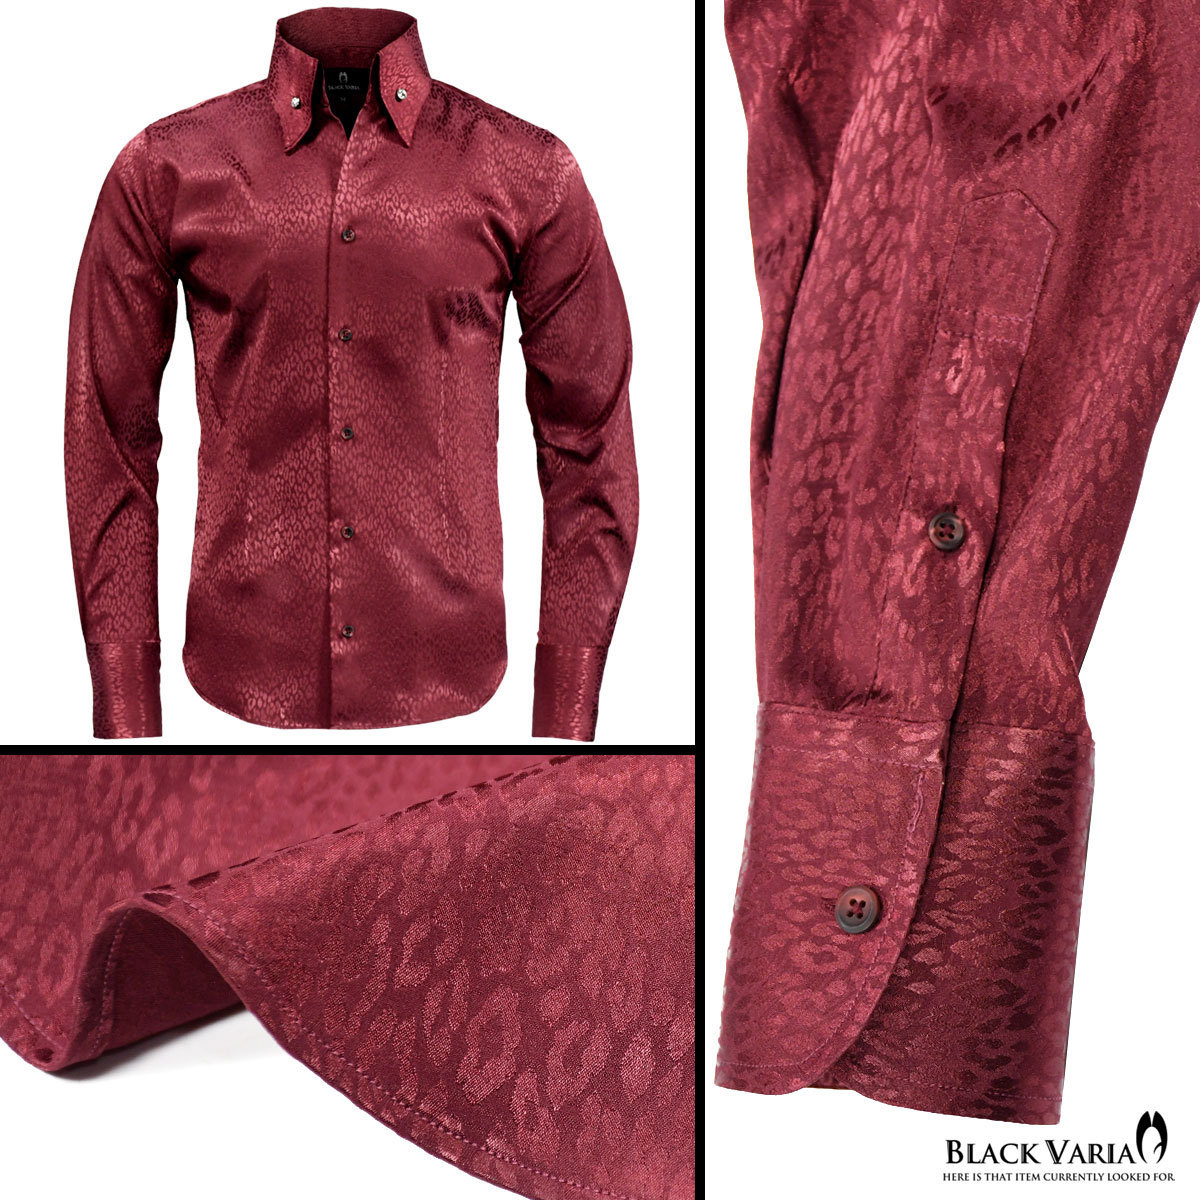 191853-winS BLACK VARIA ジャガード豹柄 スキッパー スワロフスキーBD ドレスシャツ スリム メンズ(クリスタル釦 ワイン赤) L 衣装_画像5